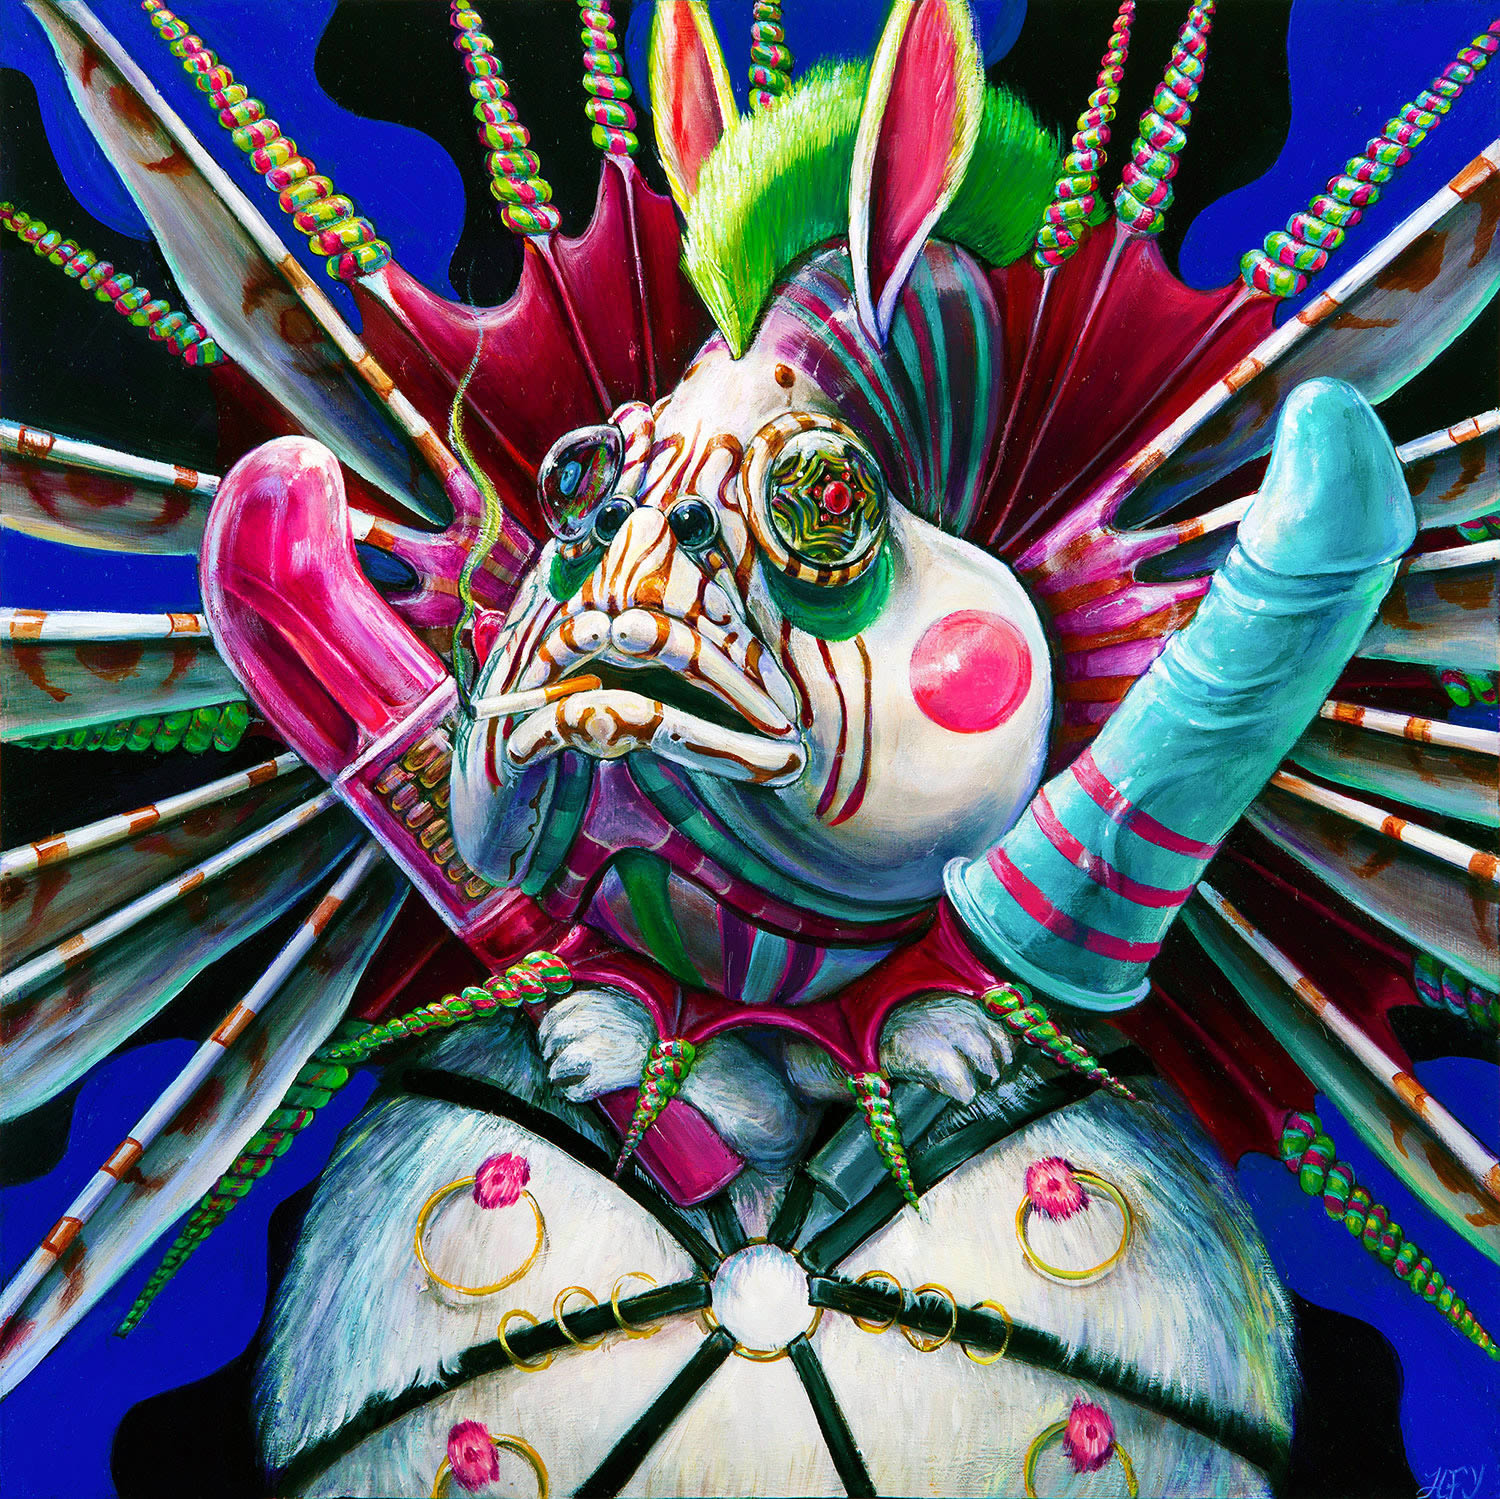 Hannah Faith Yata - fish-headed god-like creature with phallic and psychedelic decorations